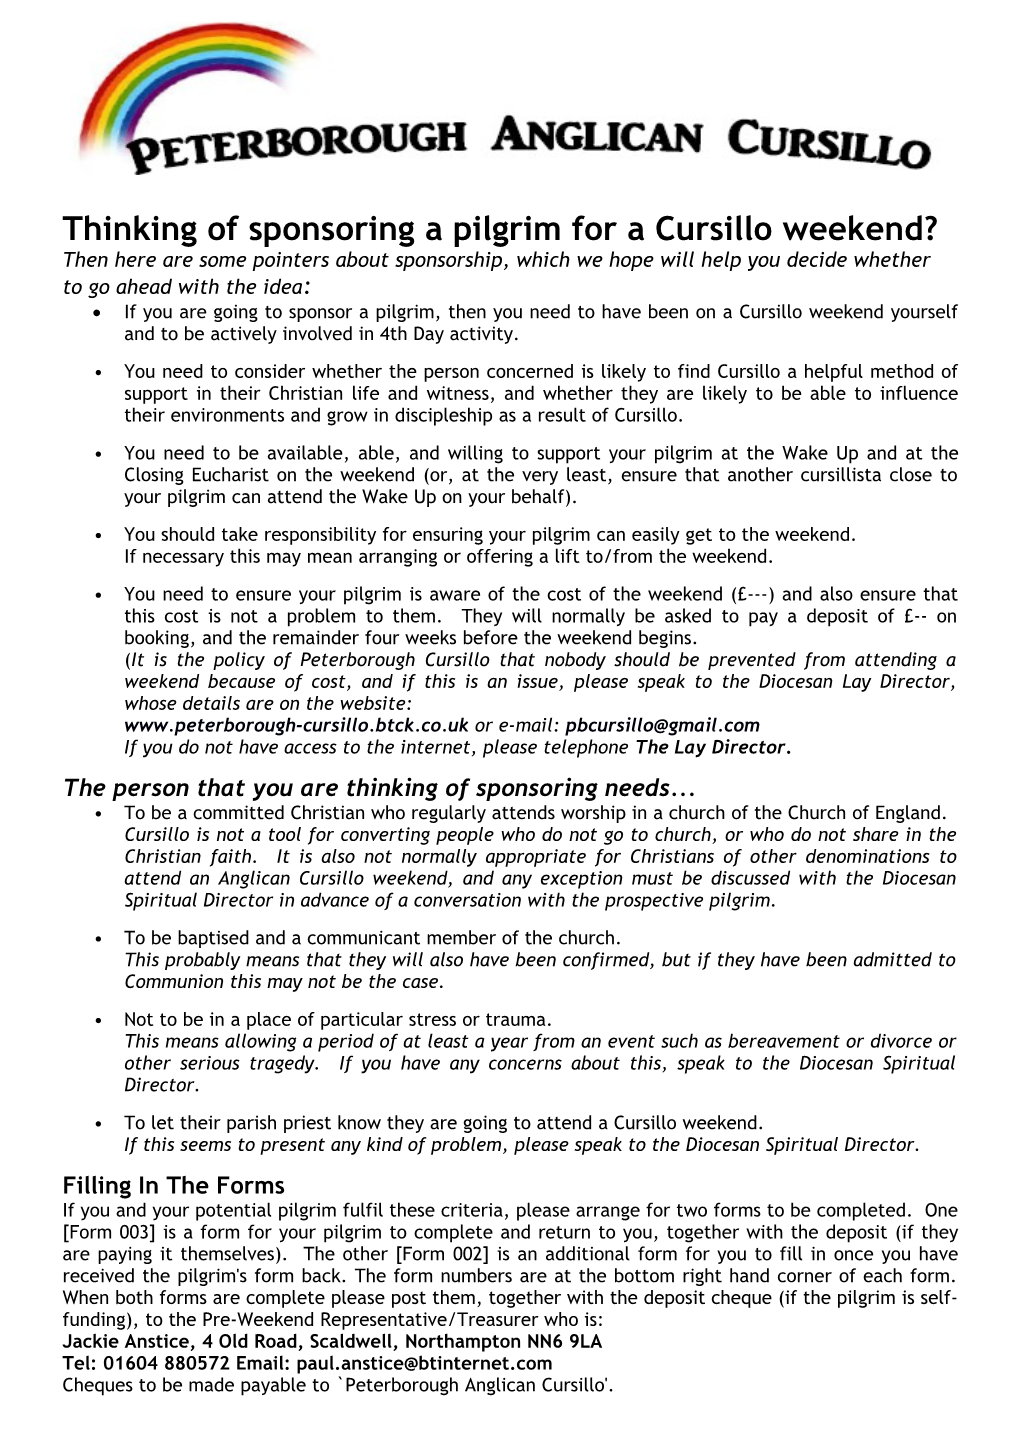 Thinking of Sponsoringa Pilgrim for a Cursillo Weekend?